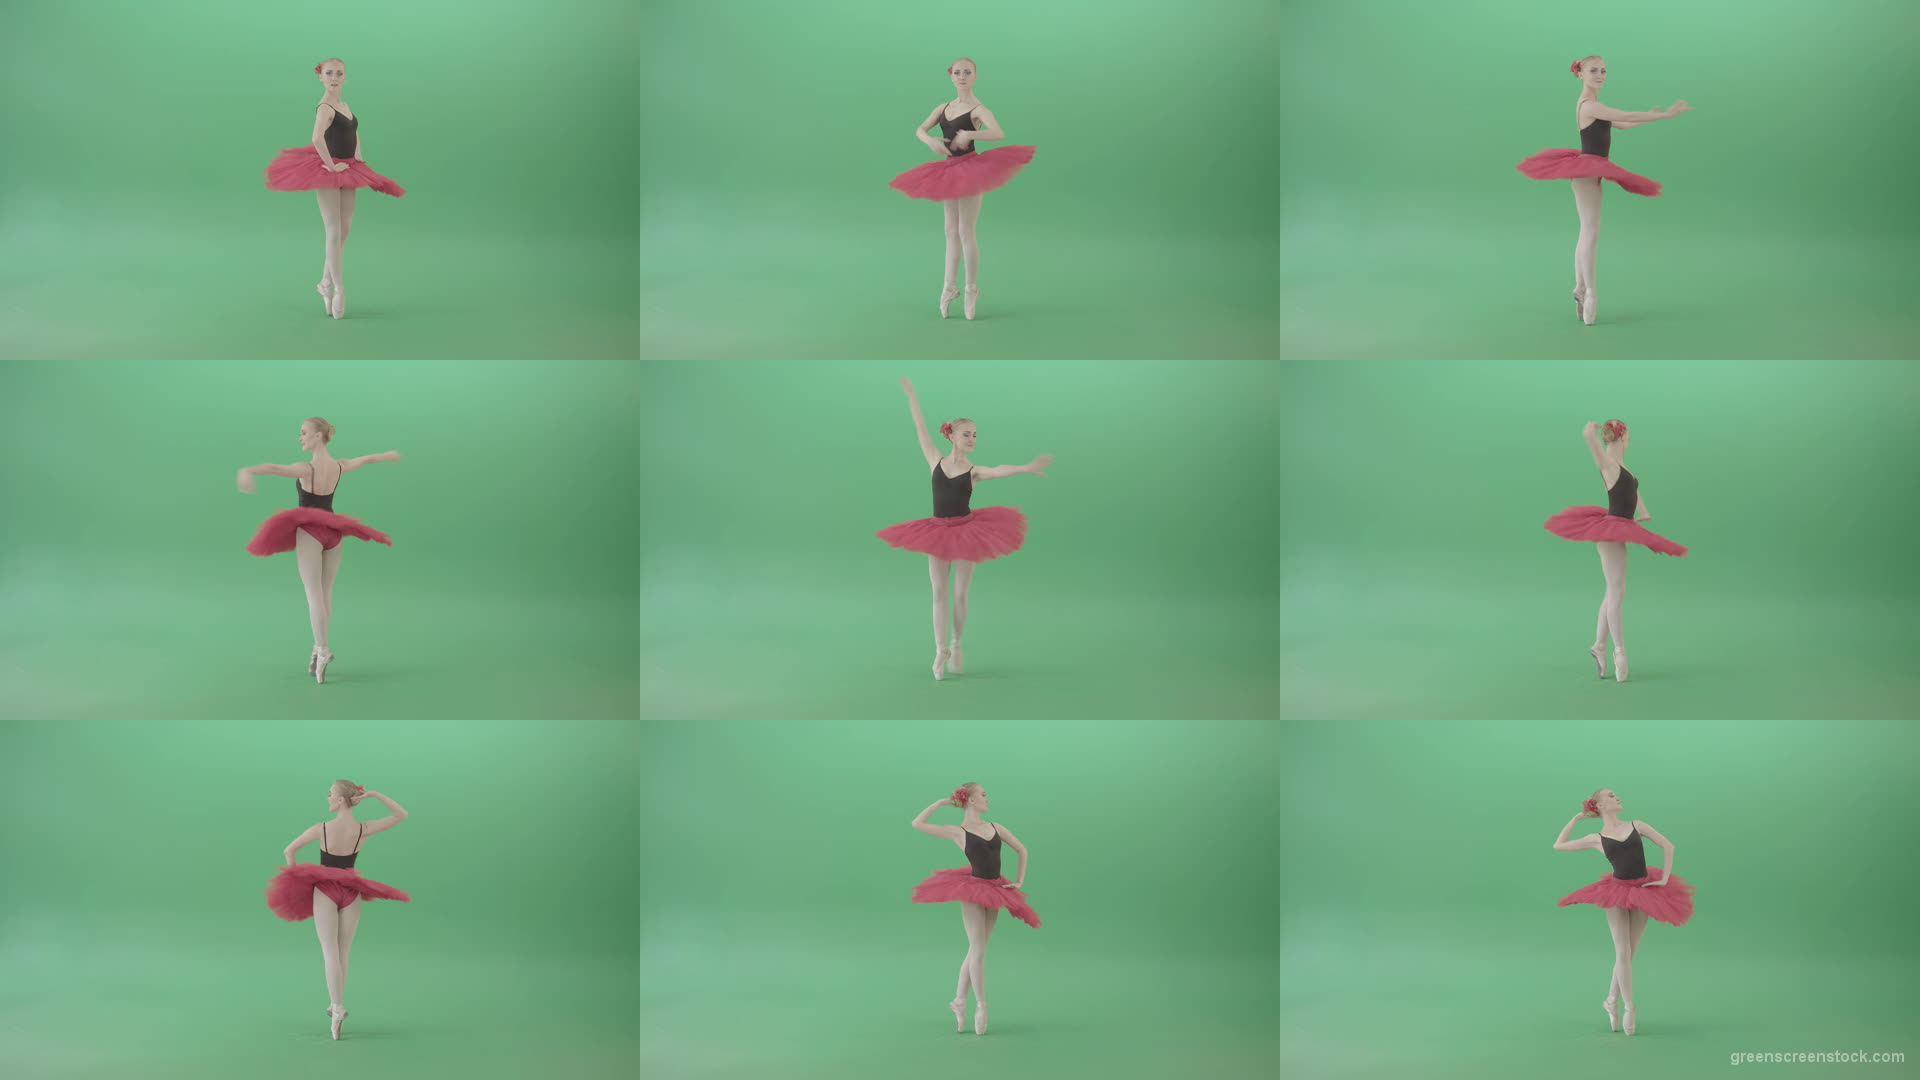 Happy-smiling-ballet-girl-ballerina-spinning-in-dance-on-green-screen-4K-Video-Footage-1920 Green Screen Stock